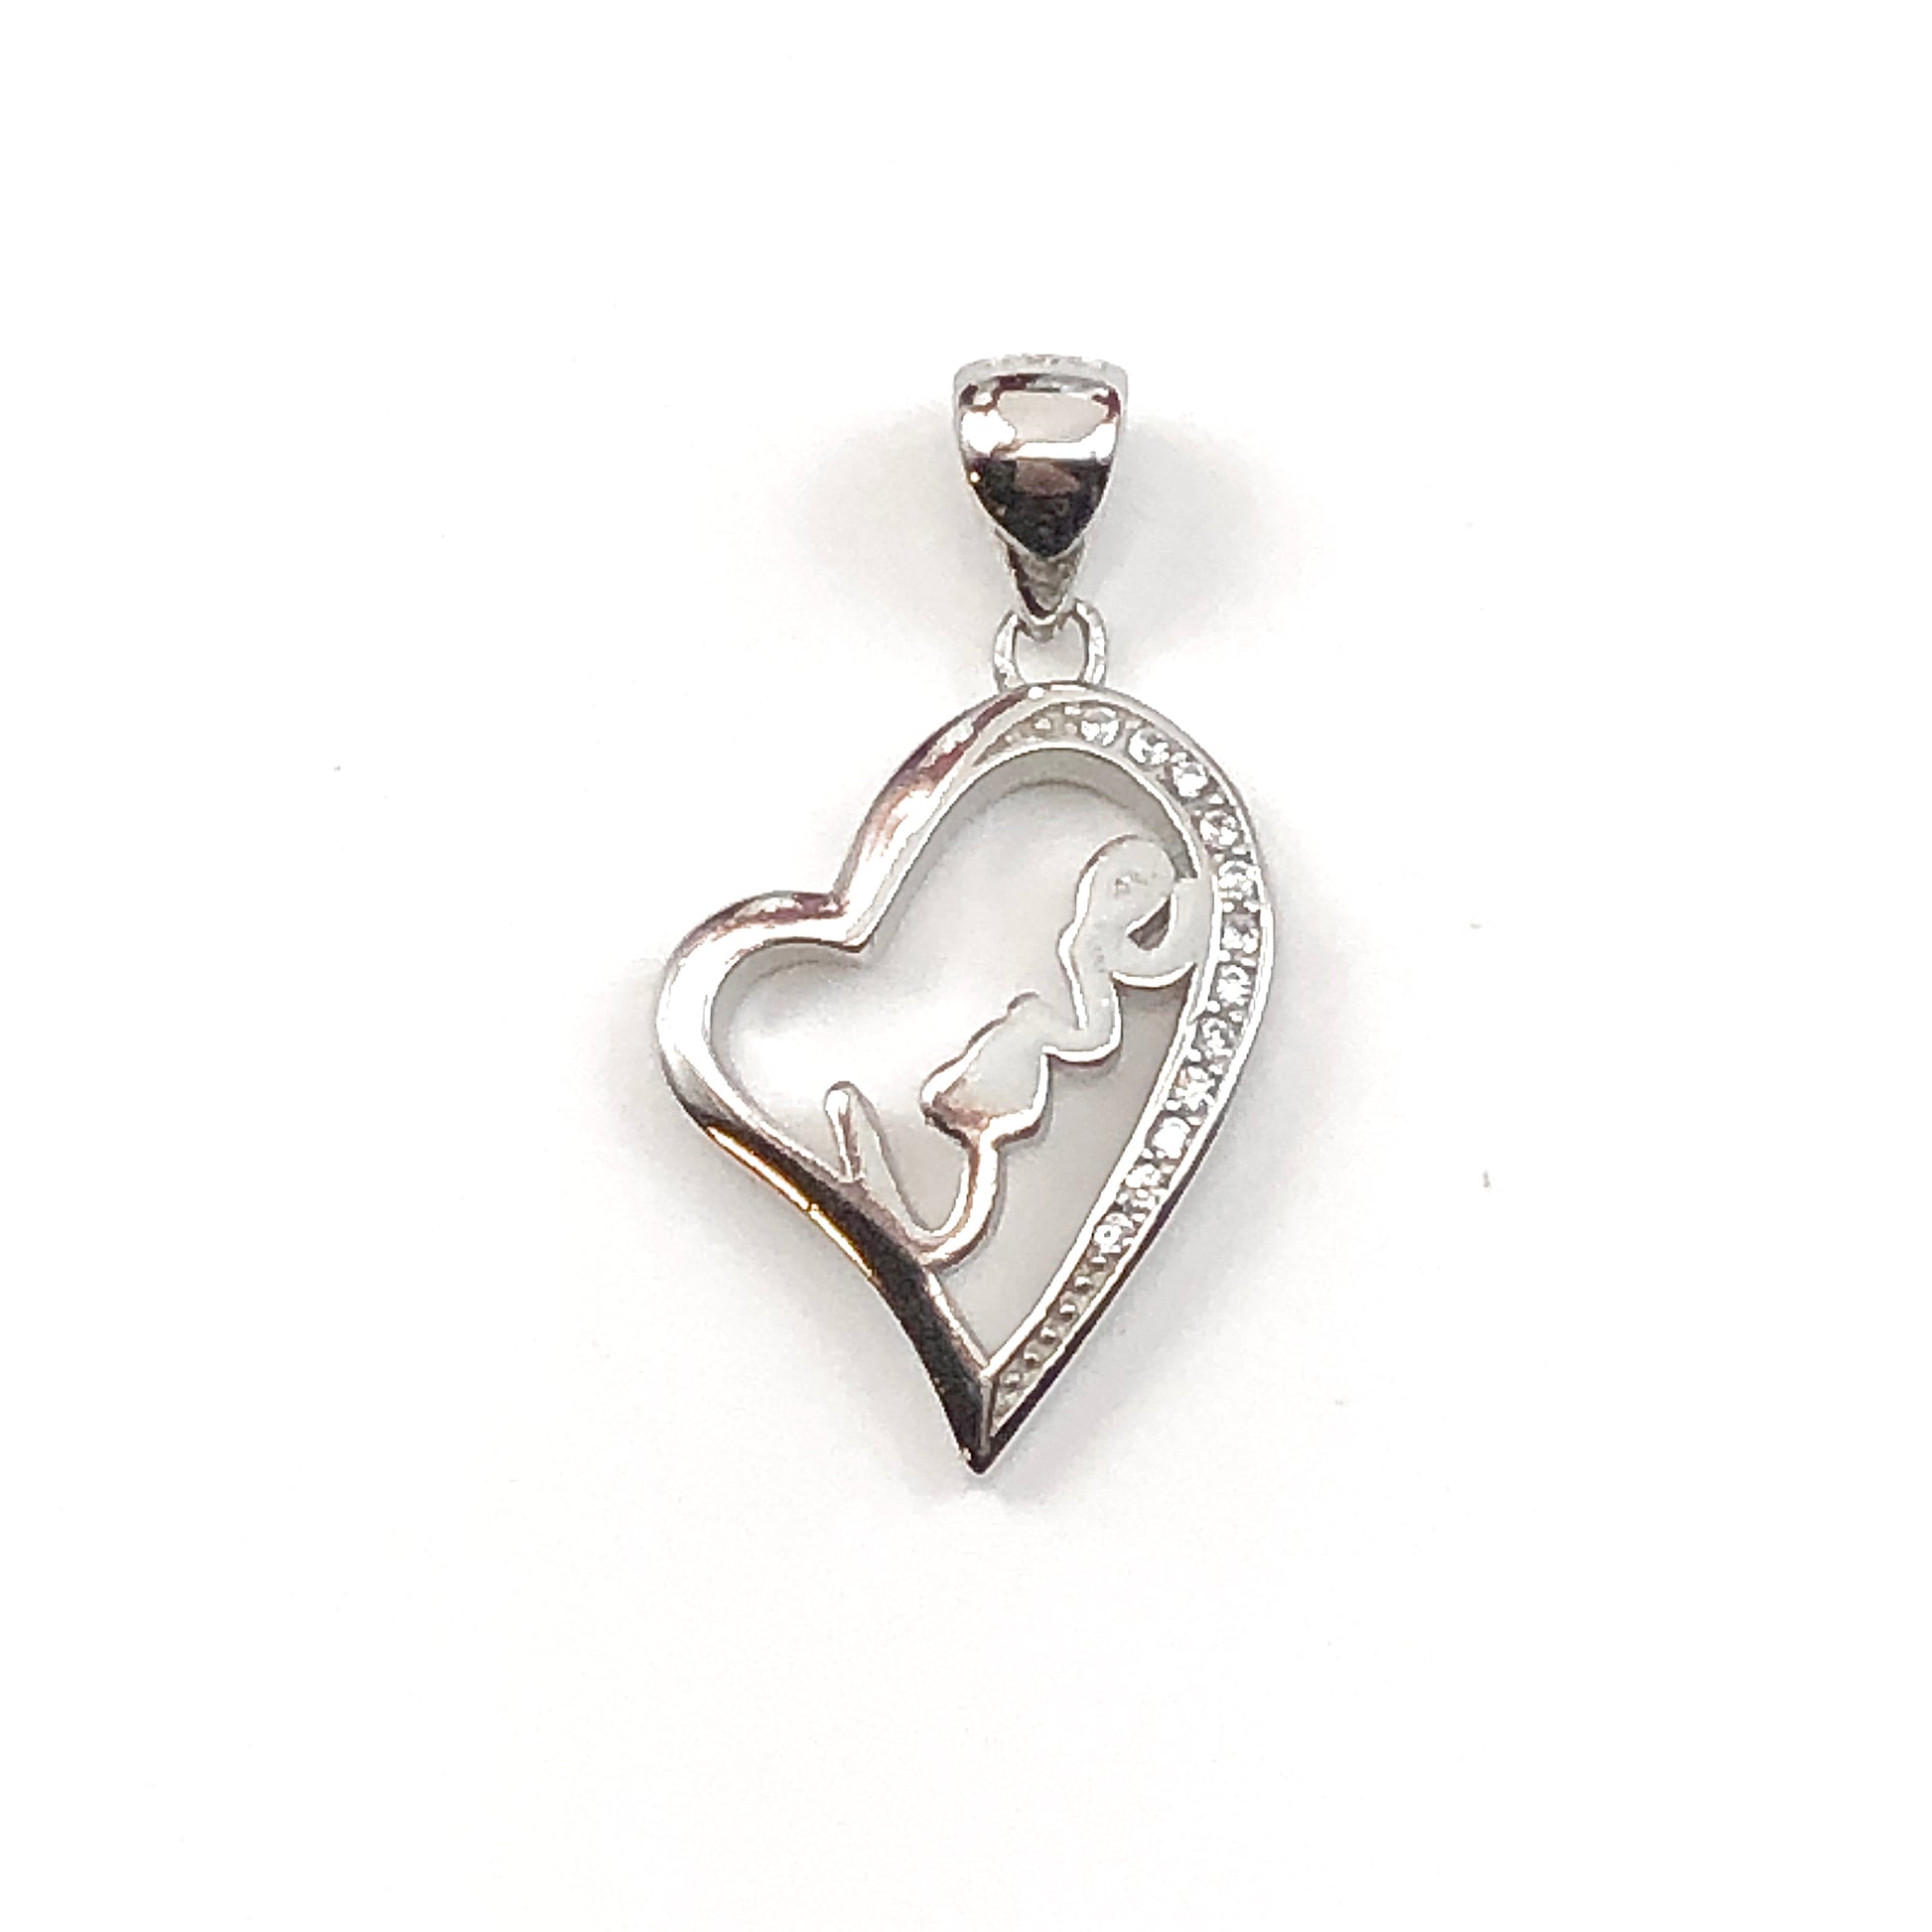 Blingschlingers Jewelry - Womens Gift, Sterling Silver LOVE Heart Pendant | Girlfriend Gift